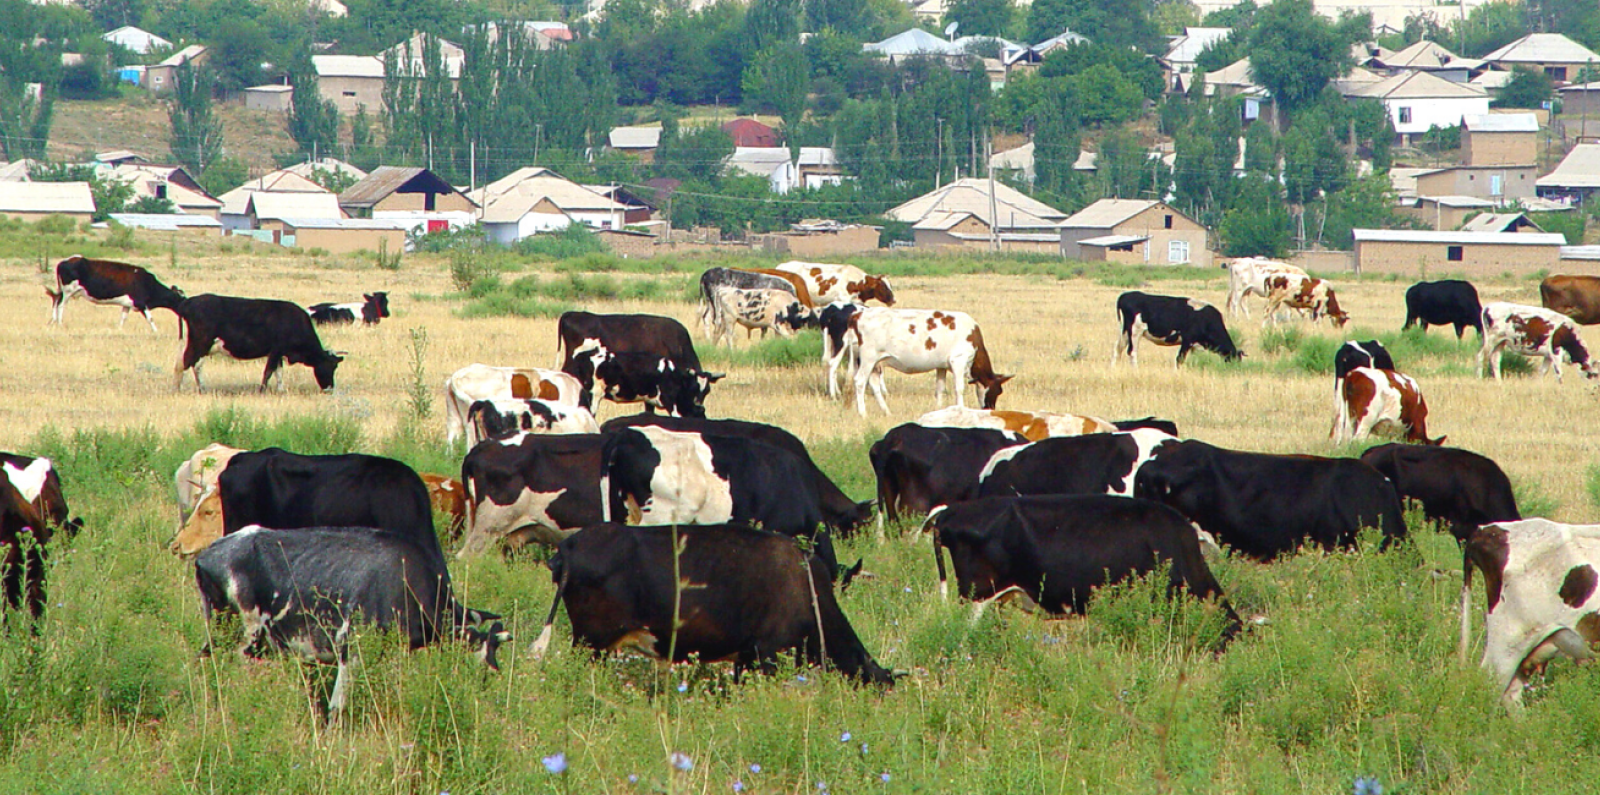 Herd of cattle graze in a pasture near a village